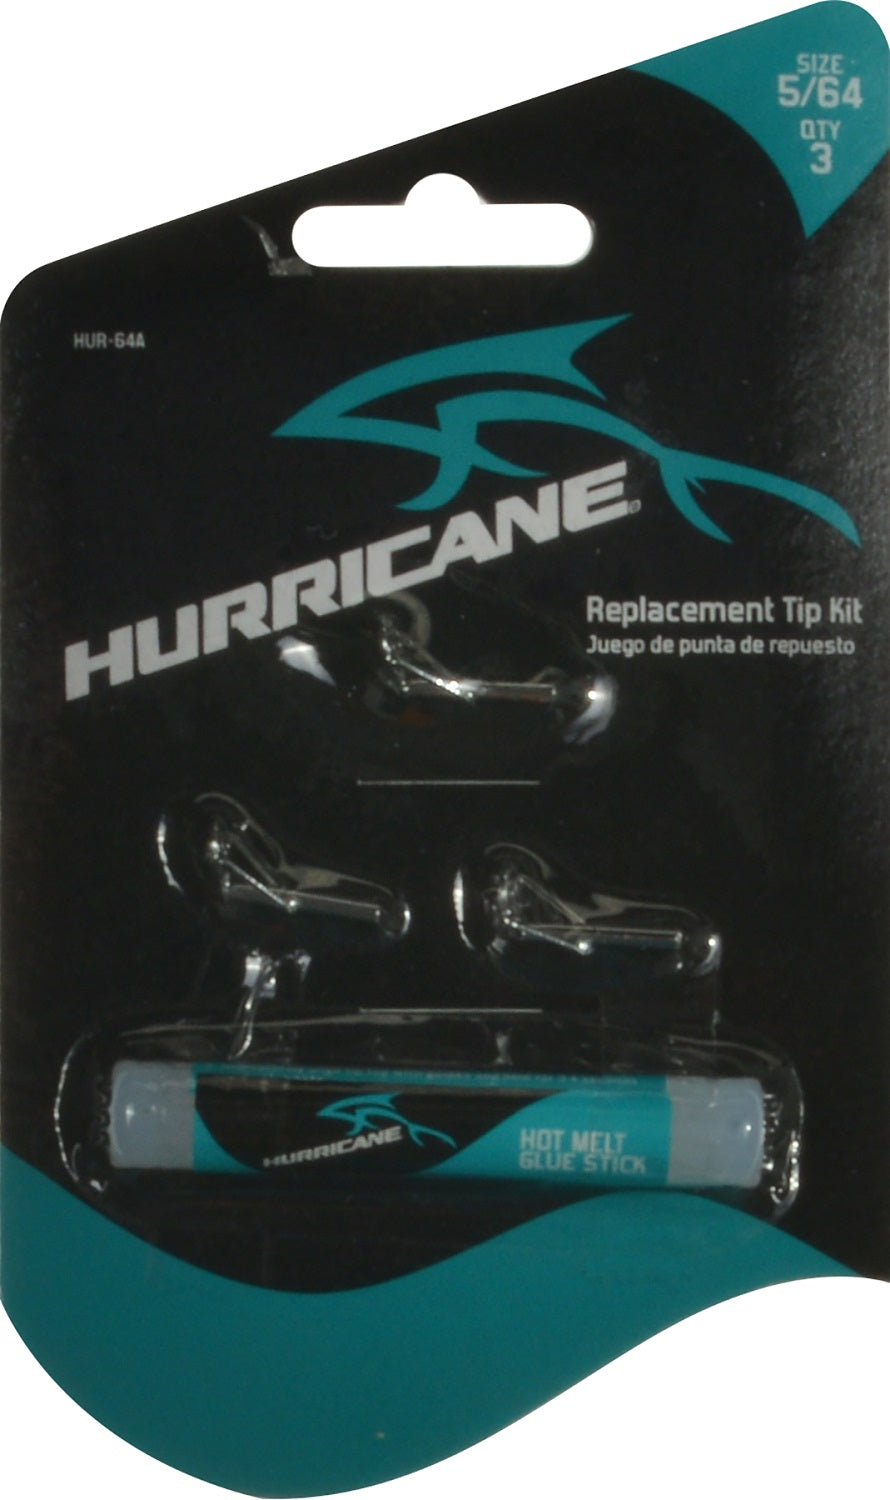 Hurricane Fishing Pole Replacement Rod Tip Repair Kit w/3 5/64" Tips+Glue Stick